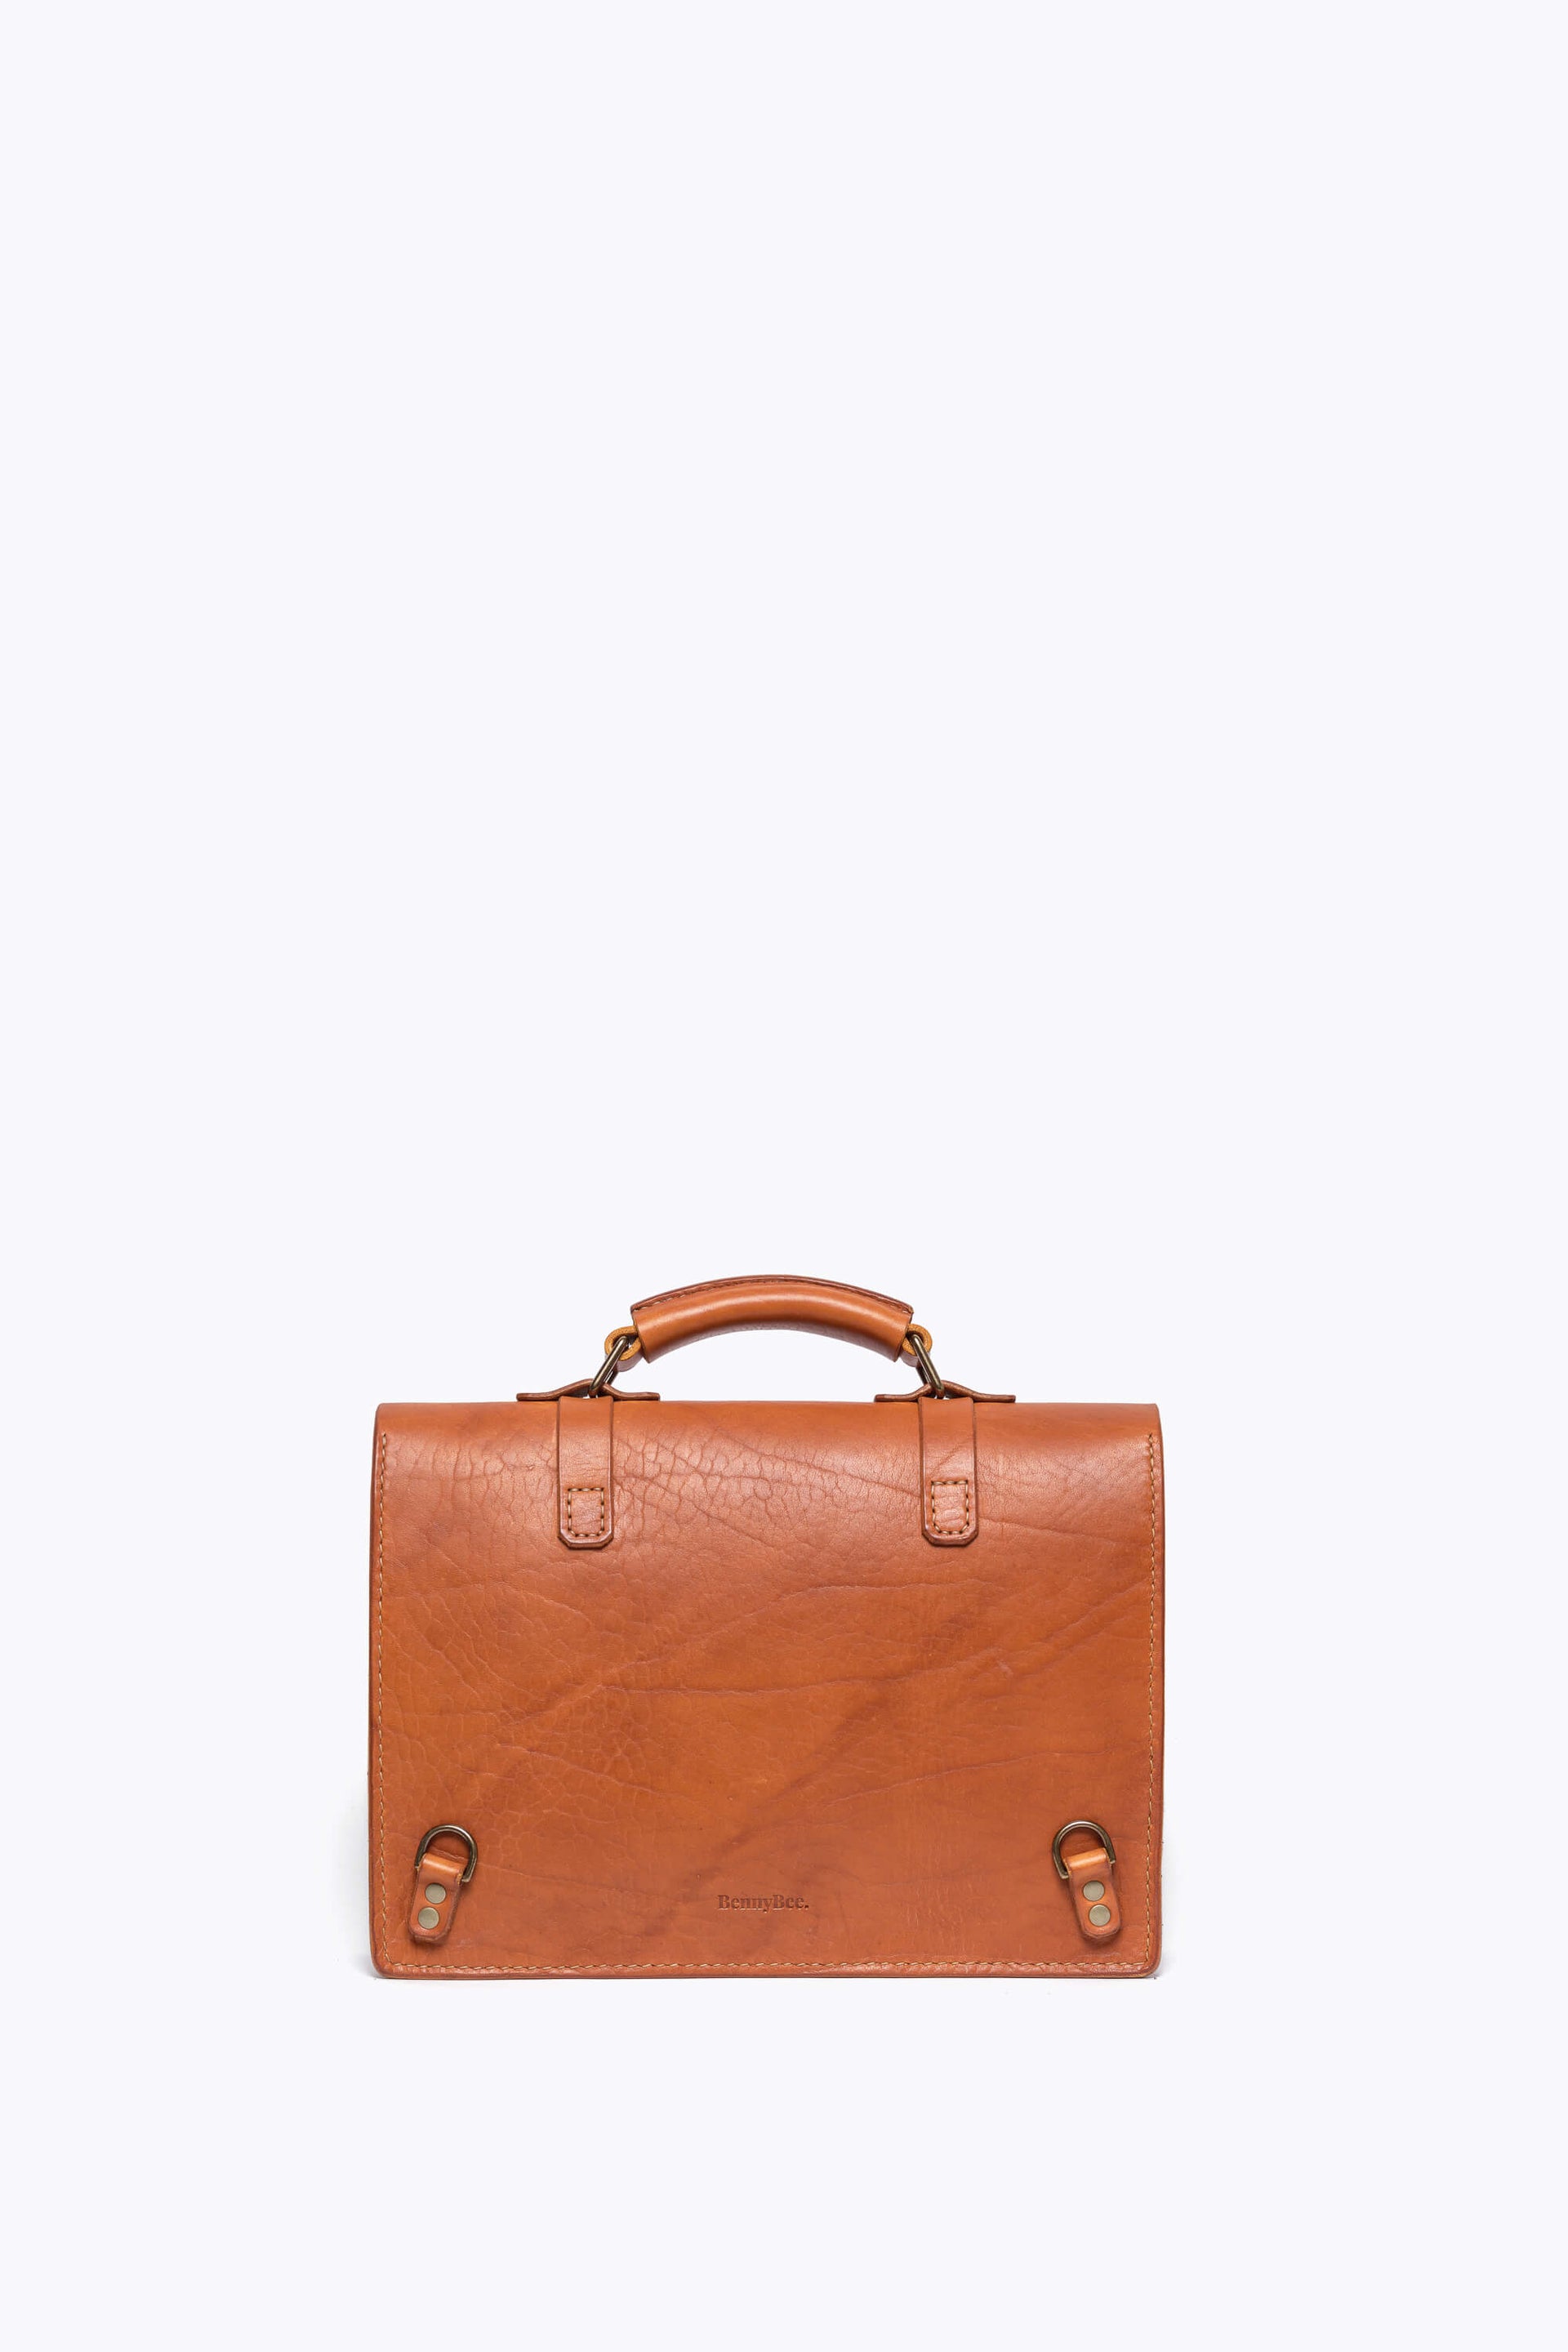 BennyBee Leather Messenger Bag 13" Cognac